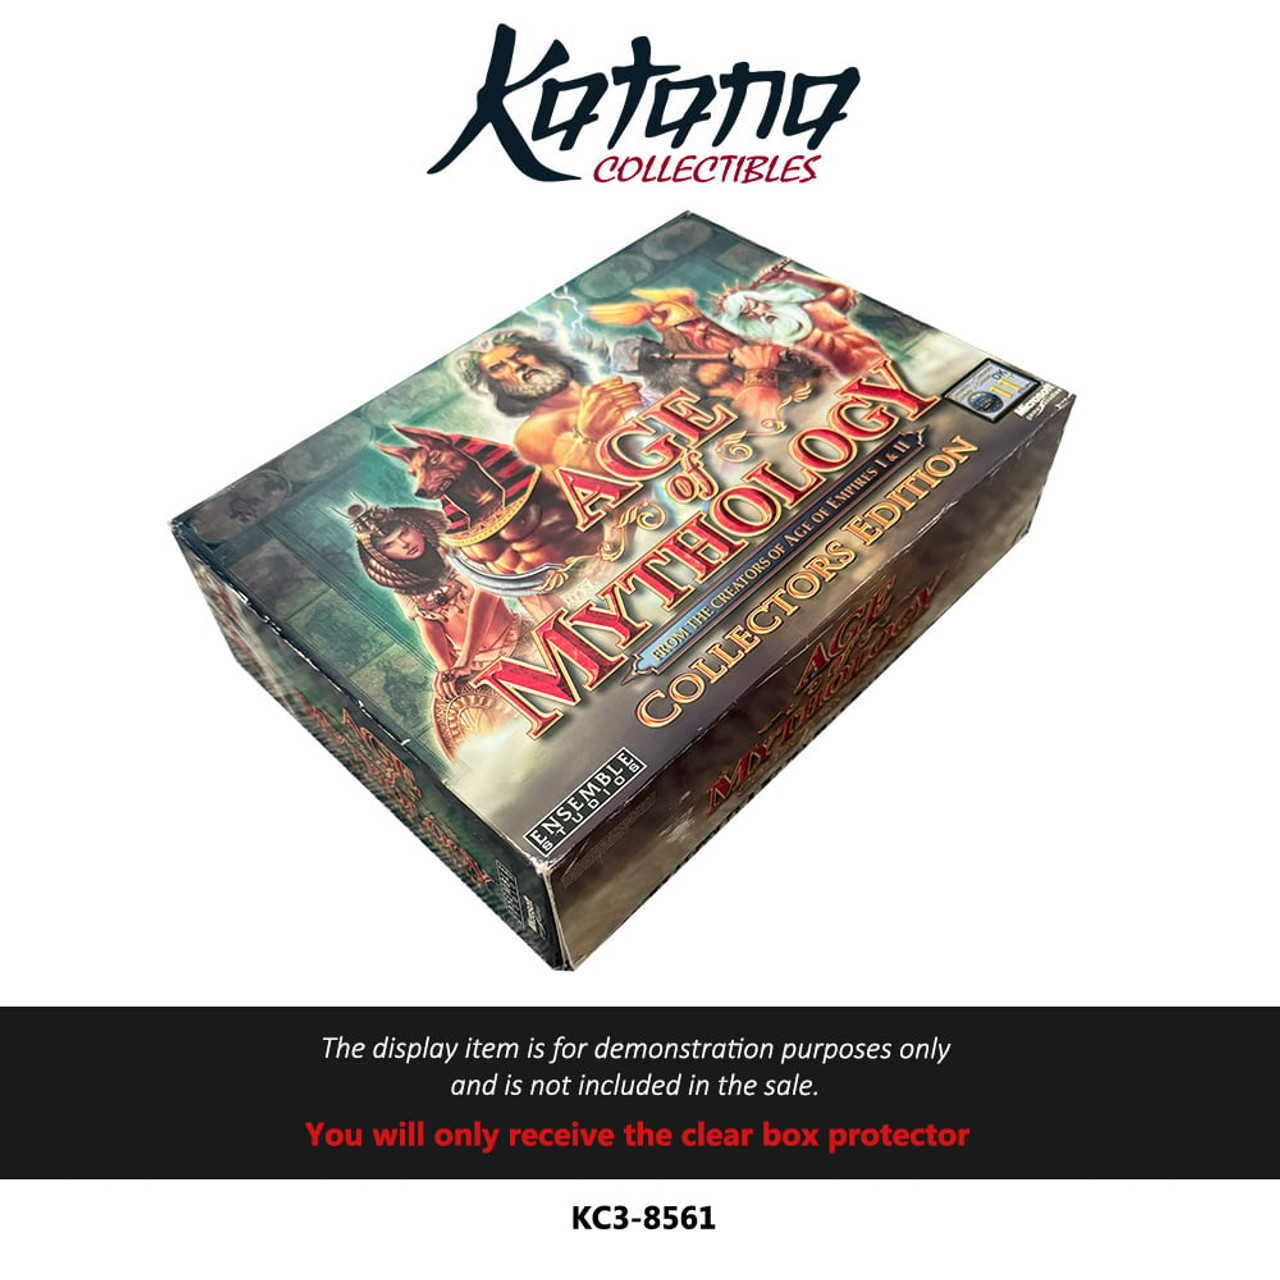 Katana Collectibles Protector For Age Of Mythology Collectors Edition Box